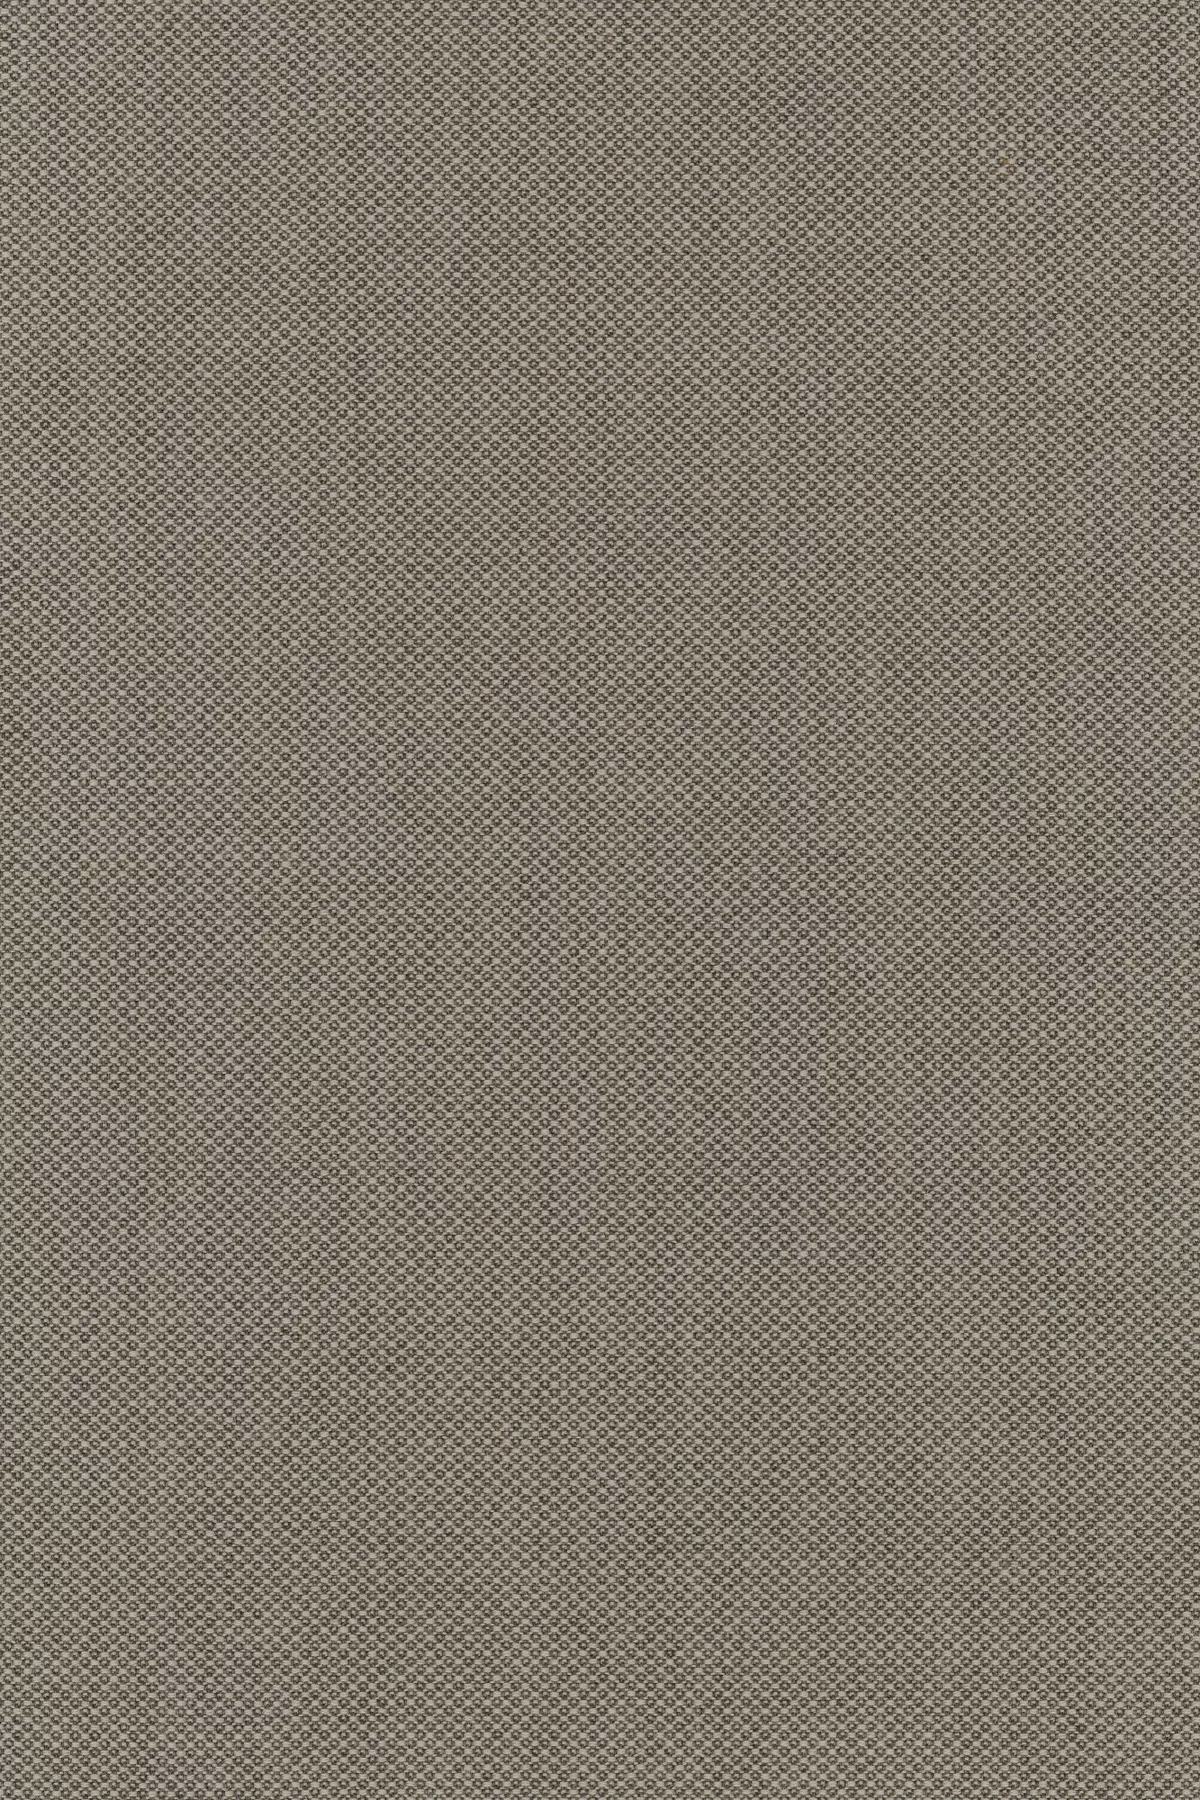 Fabric sample Fiord grey